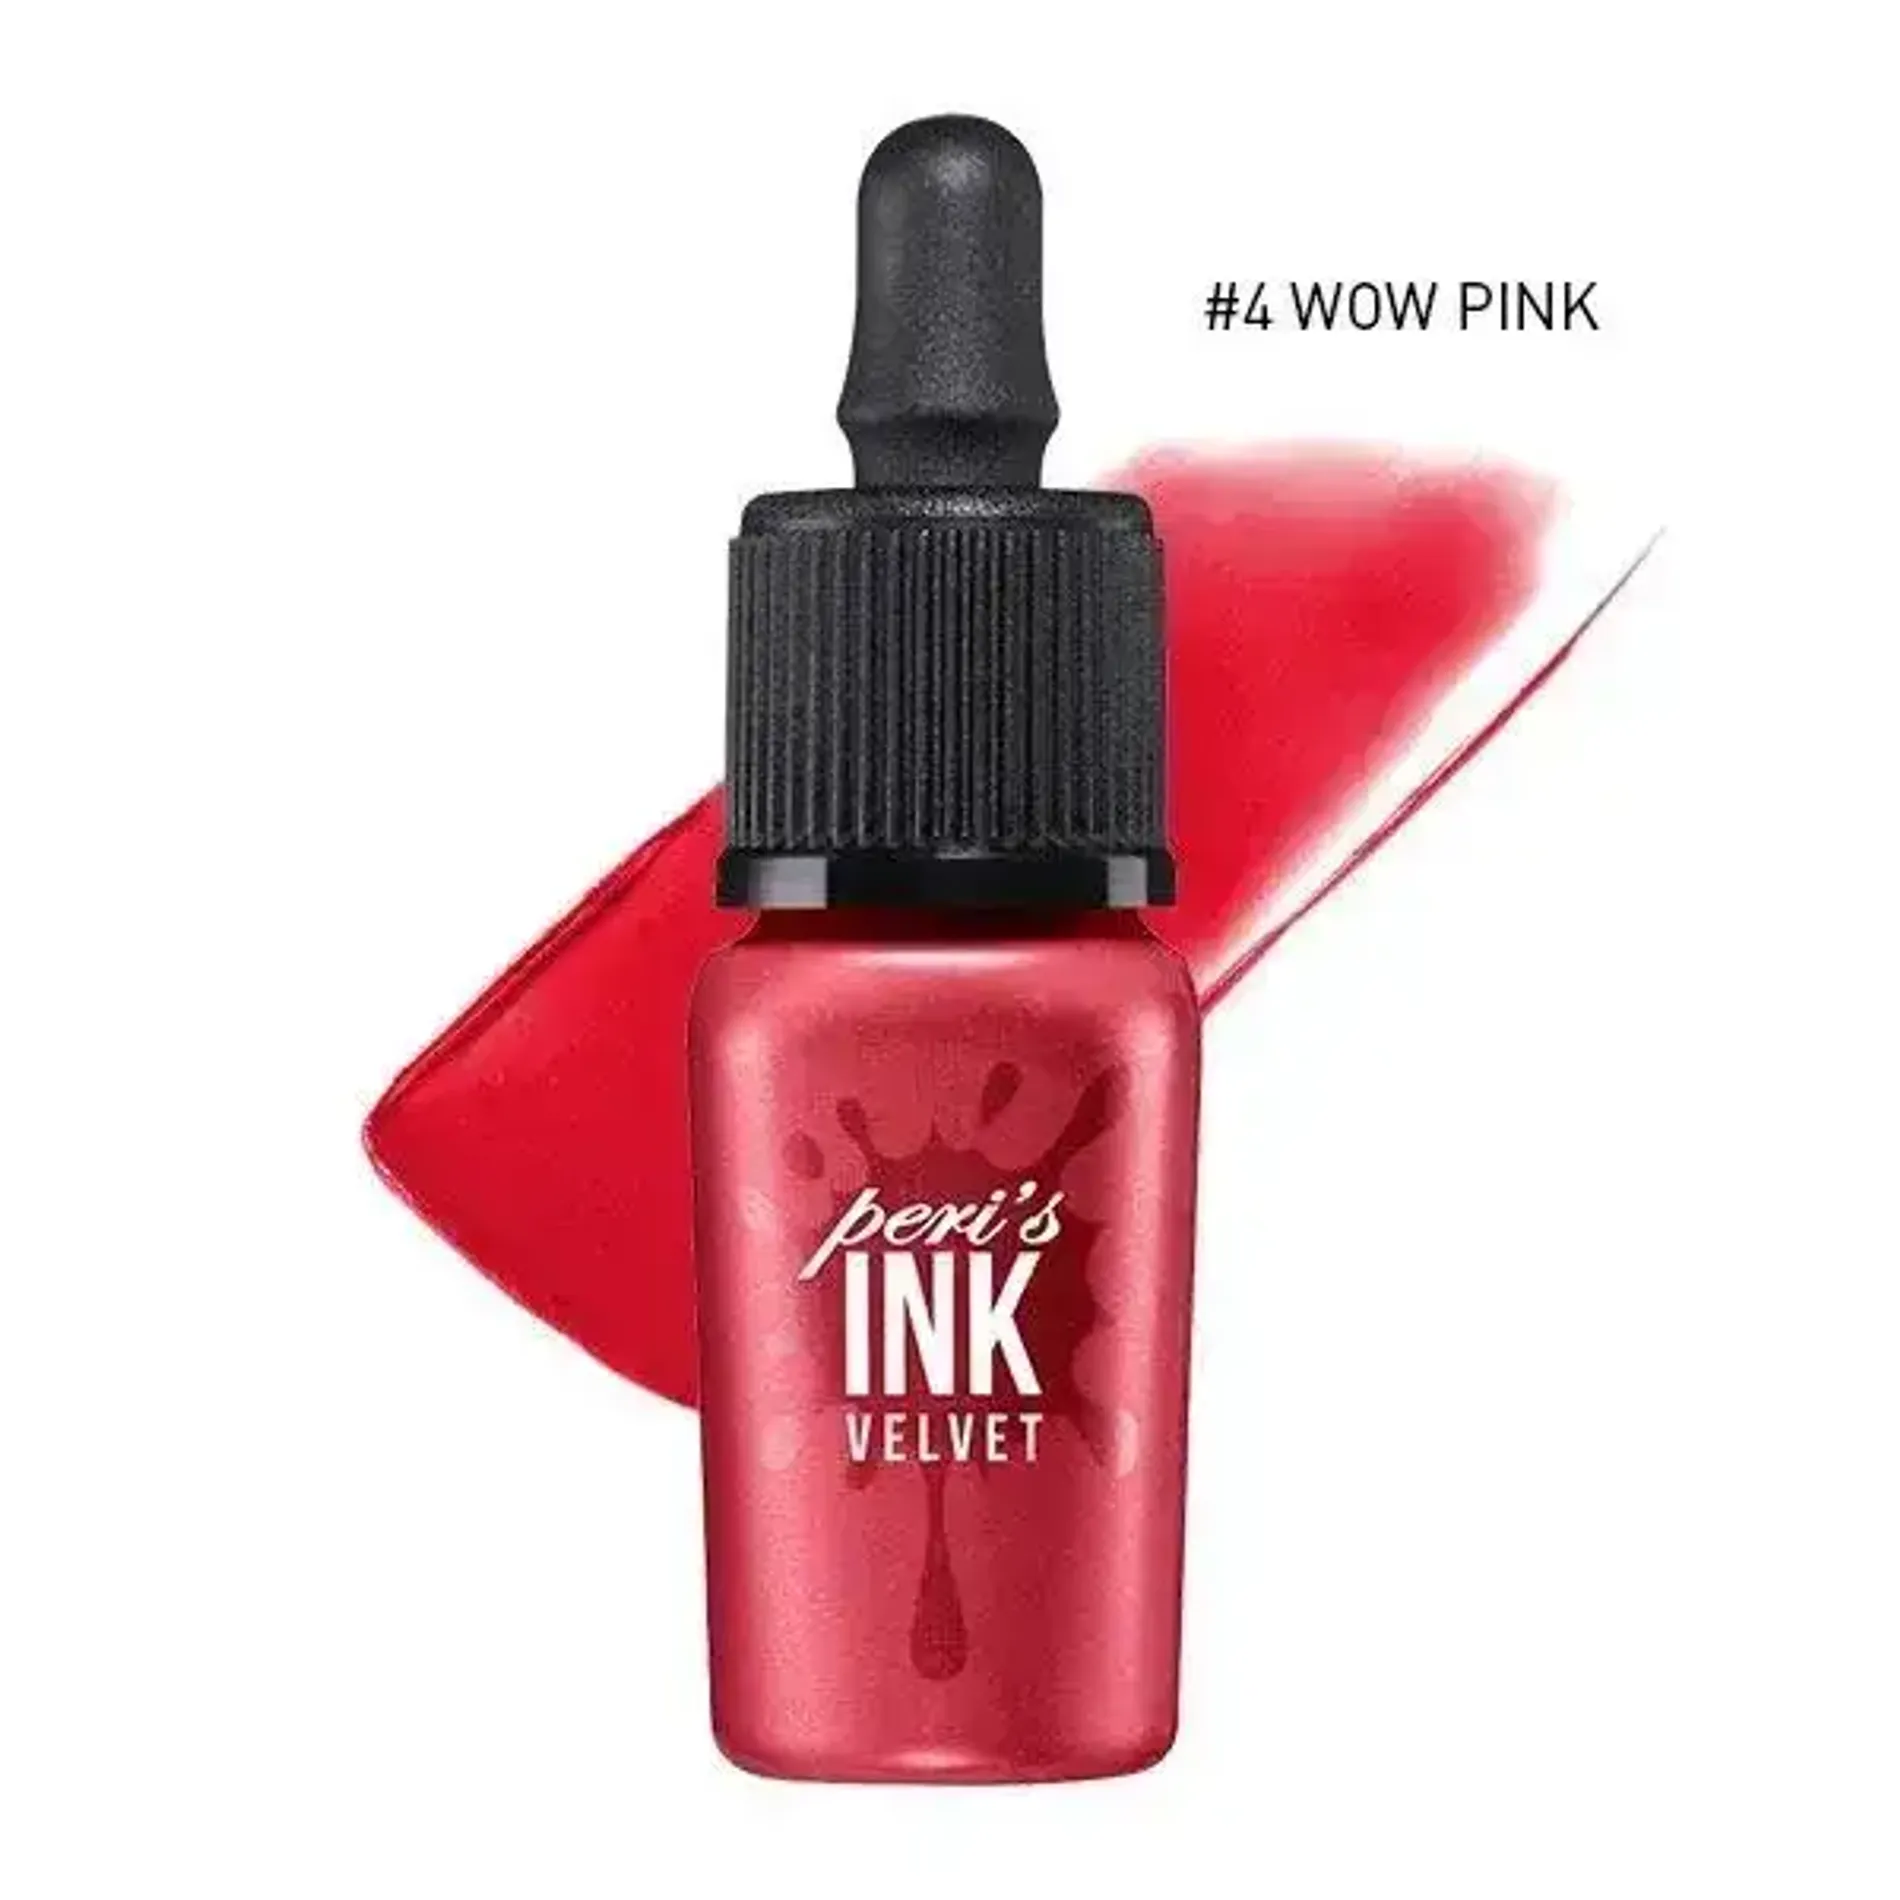 son-nuoc-peripera-ink-velvet-4-wow-pink-1